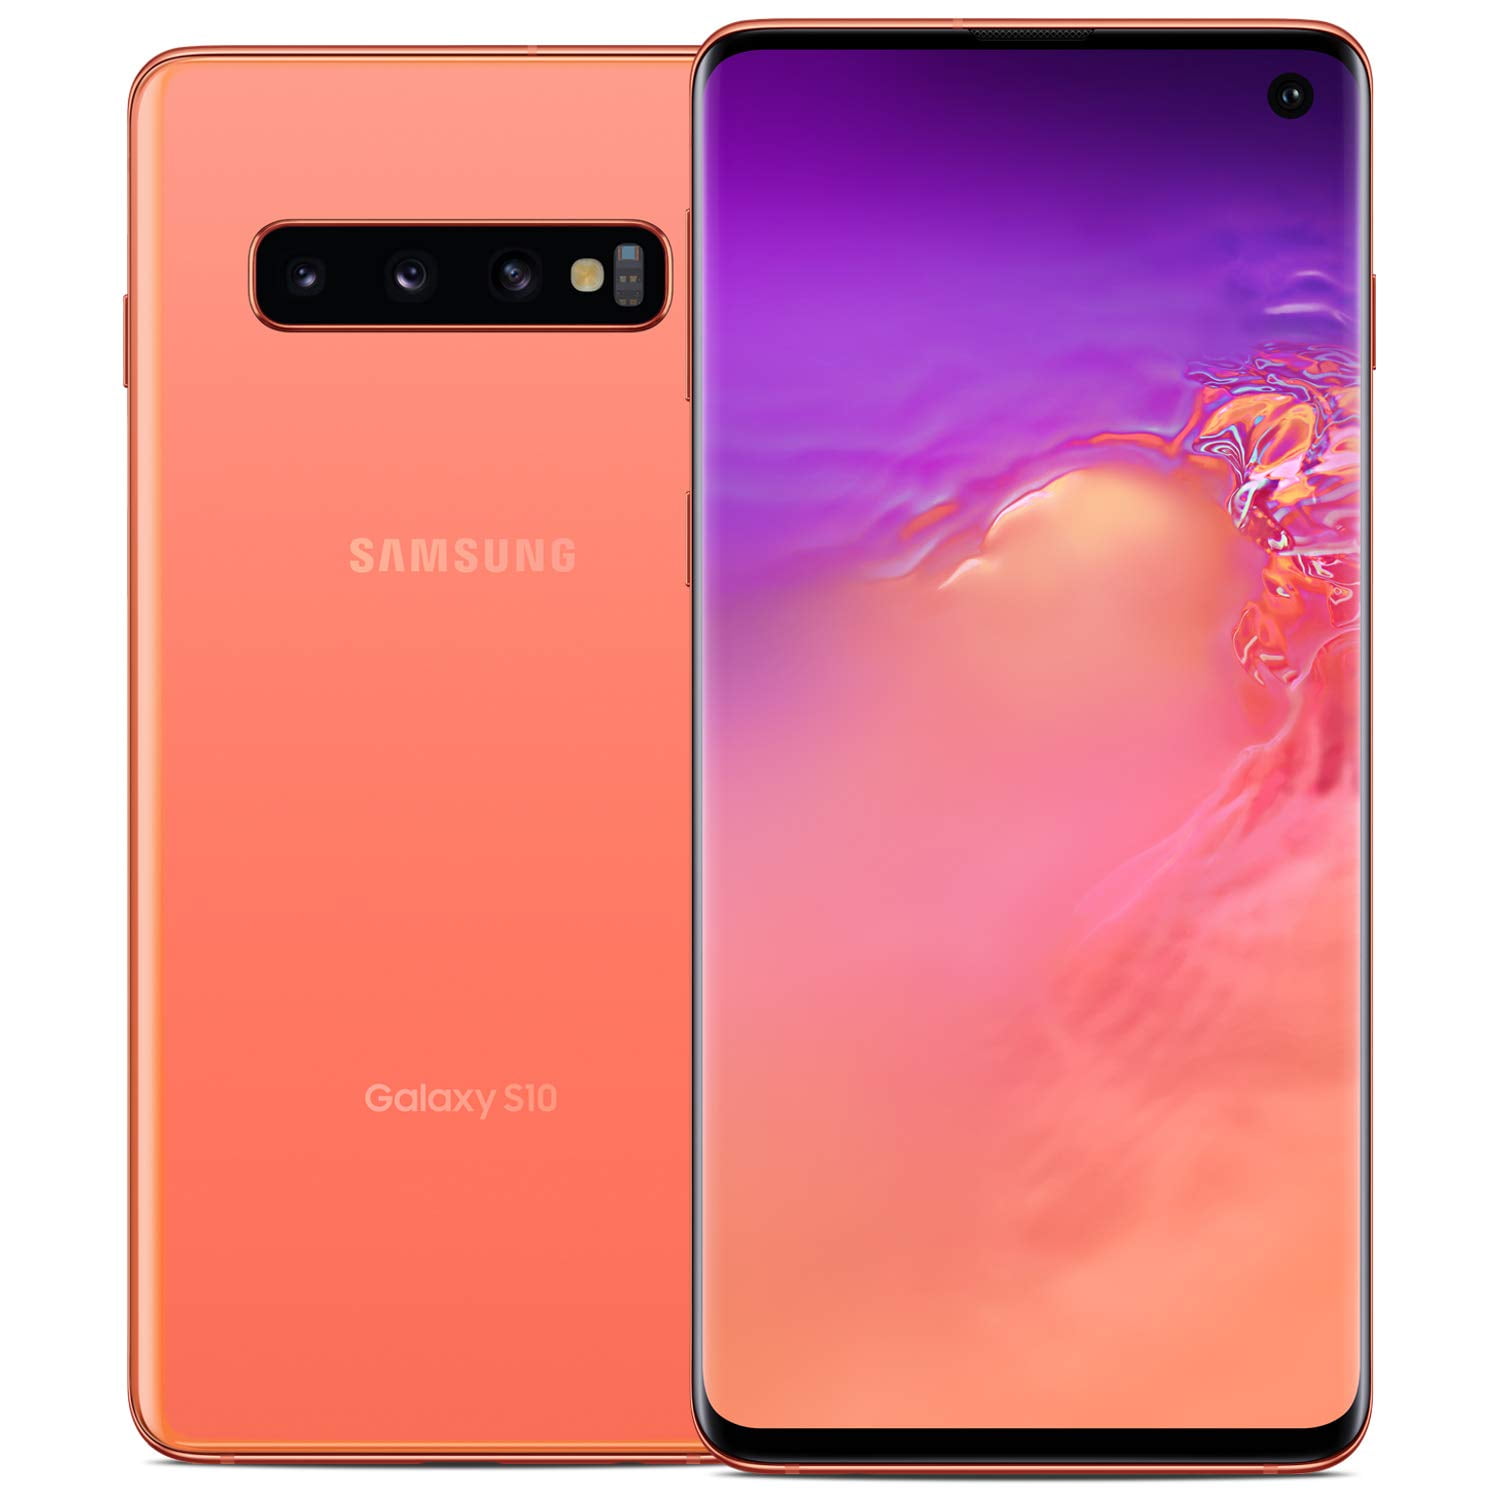 Samsung Galaxy S10 128GB SM-G973U1 All Colors - Unlocked Cell Phones Good 